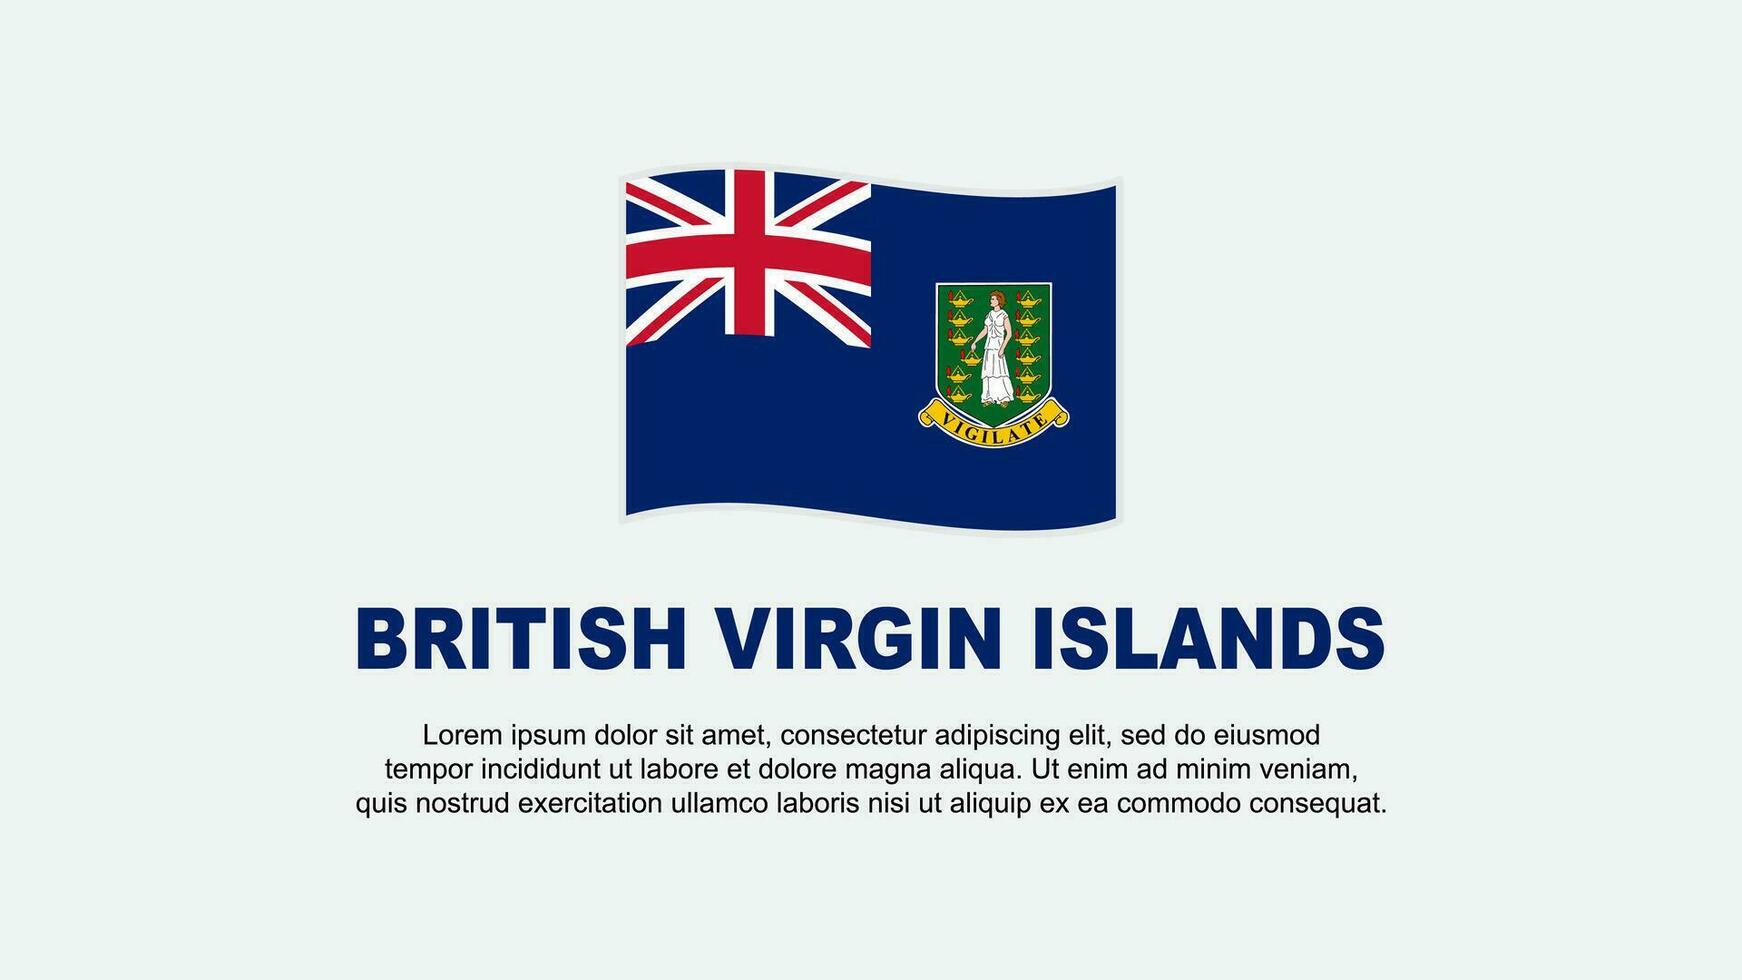 British Virgin Islands Flag Abstract Background Design Template. British Virgin Islands Independence Day Banner Social Media Vector Illustration. Background